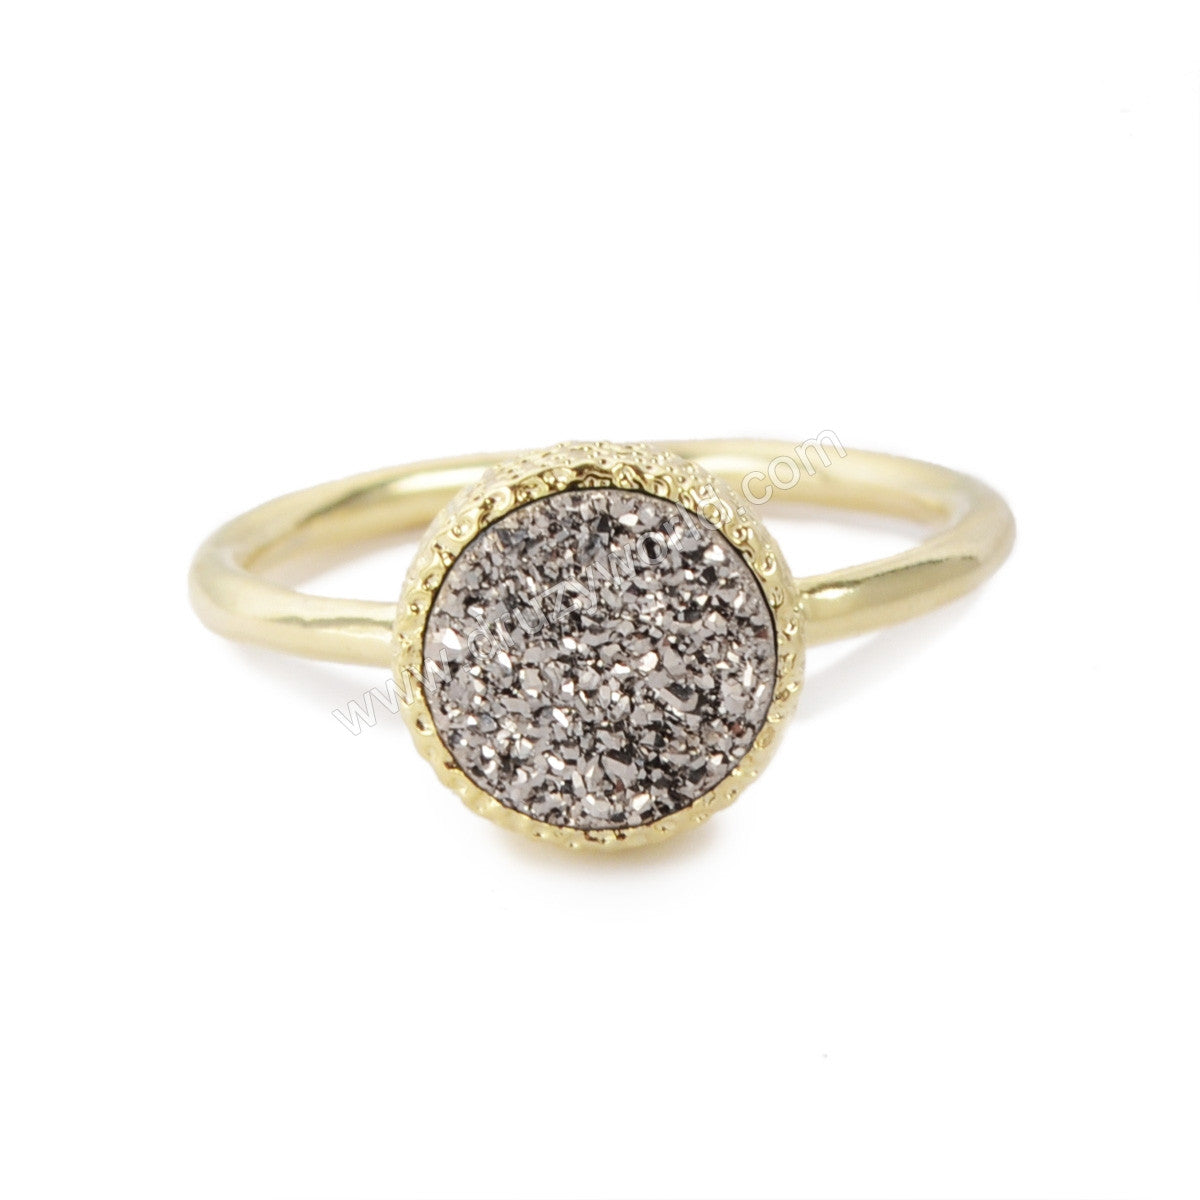 Gold Plated Bezel Round Natural Agate Titanium Druzy Ring, 8mm Gemstone Ring Jewelry ZG059